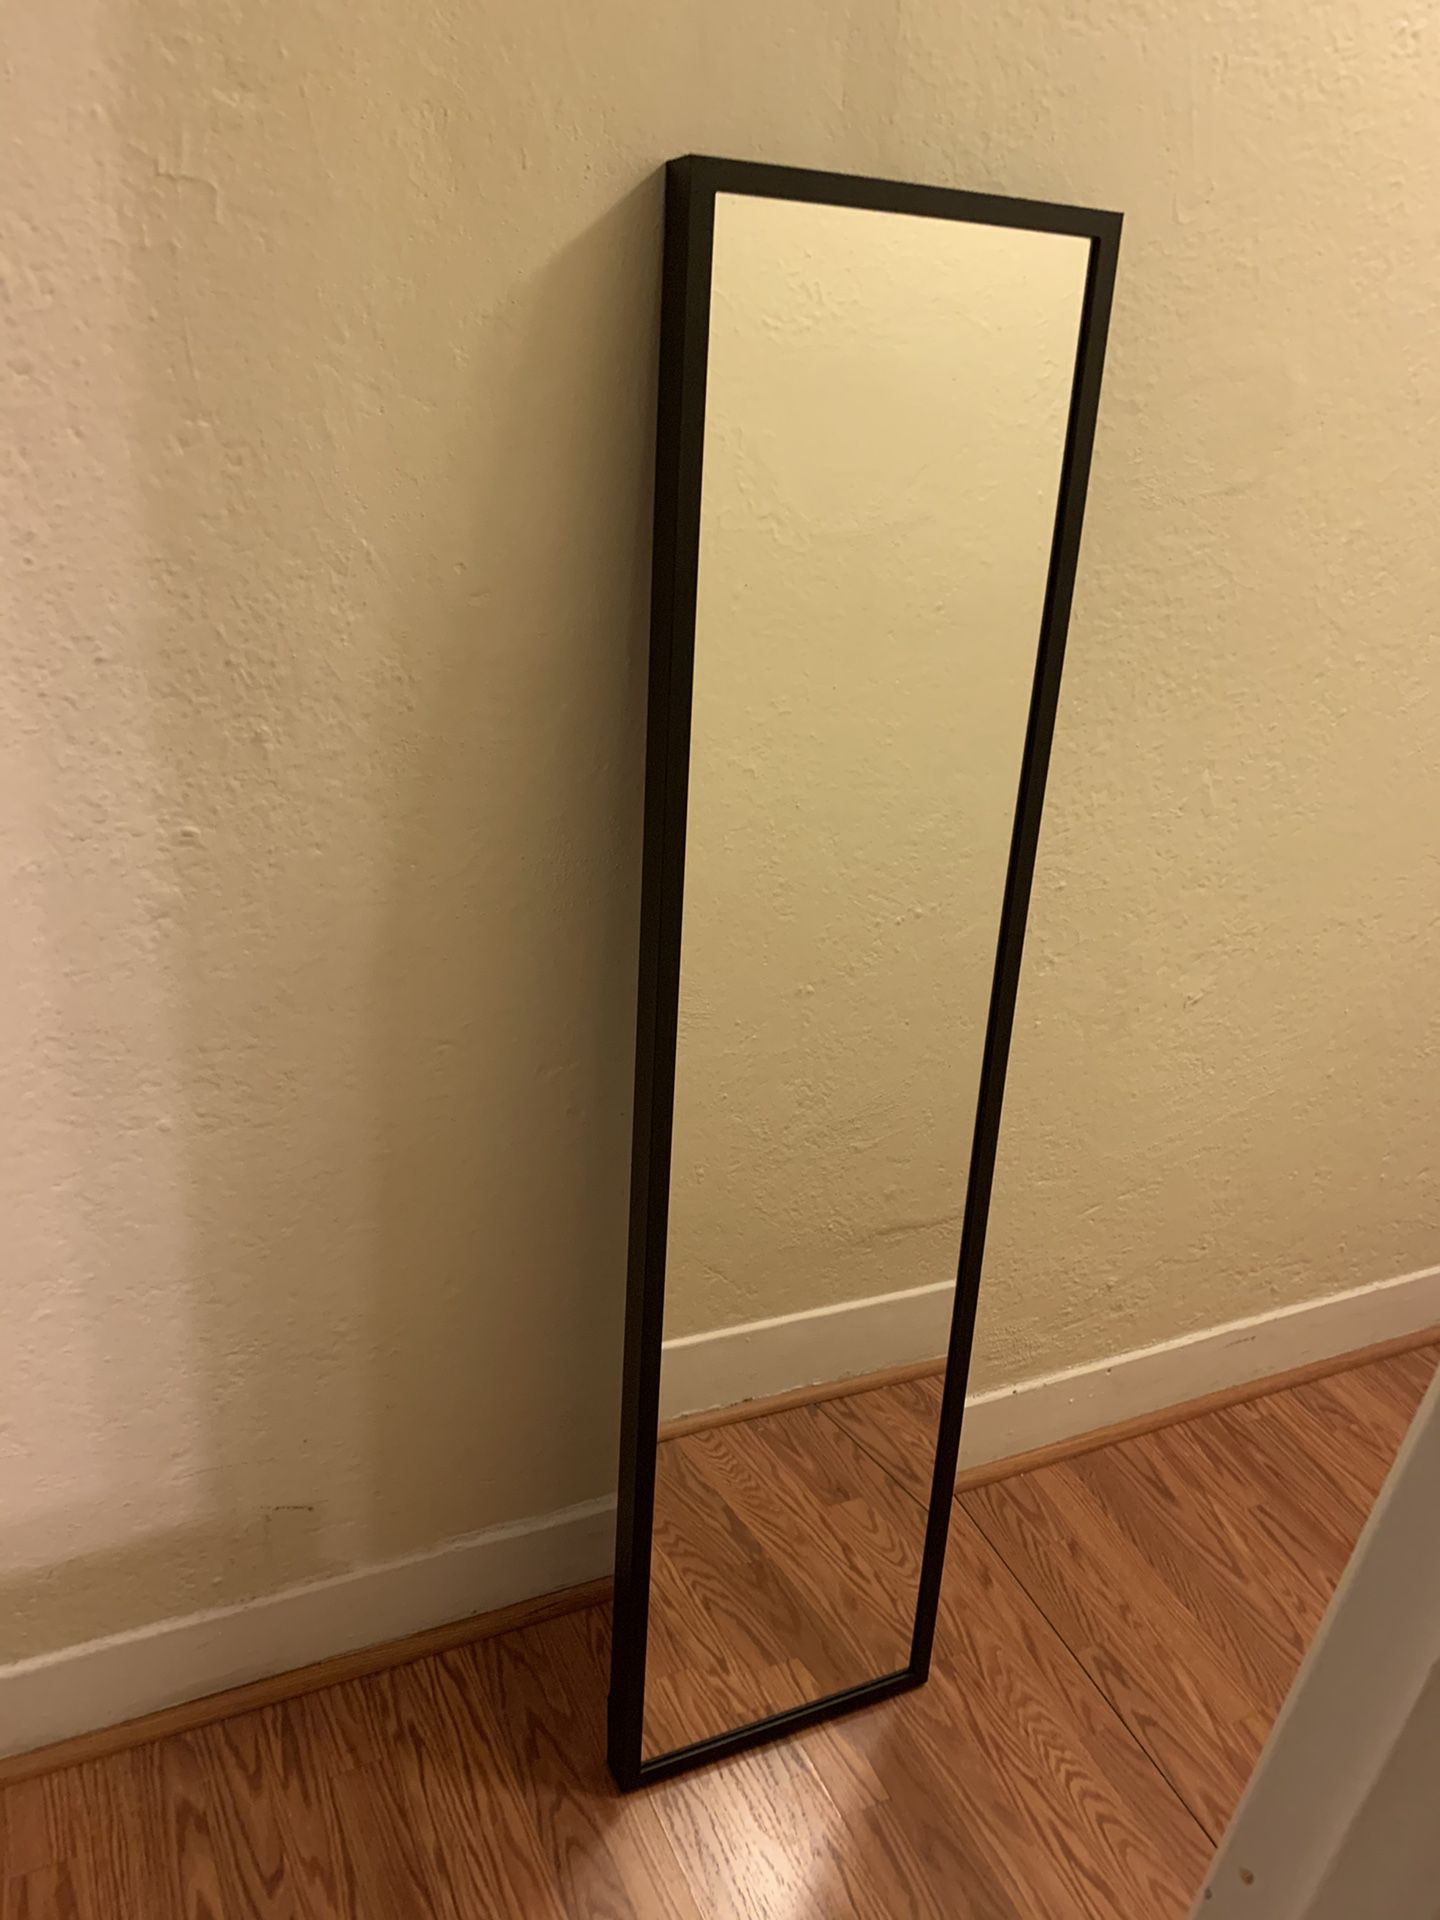 IKEA Black Wood Floor Mirror